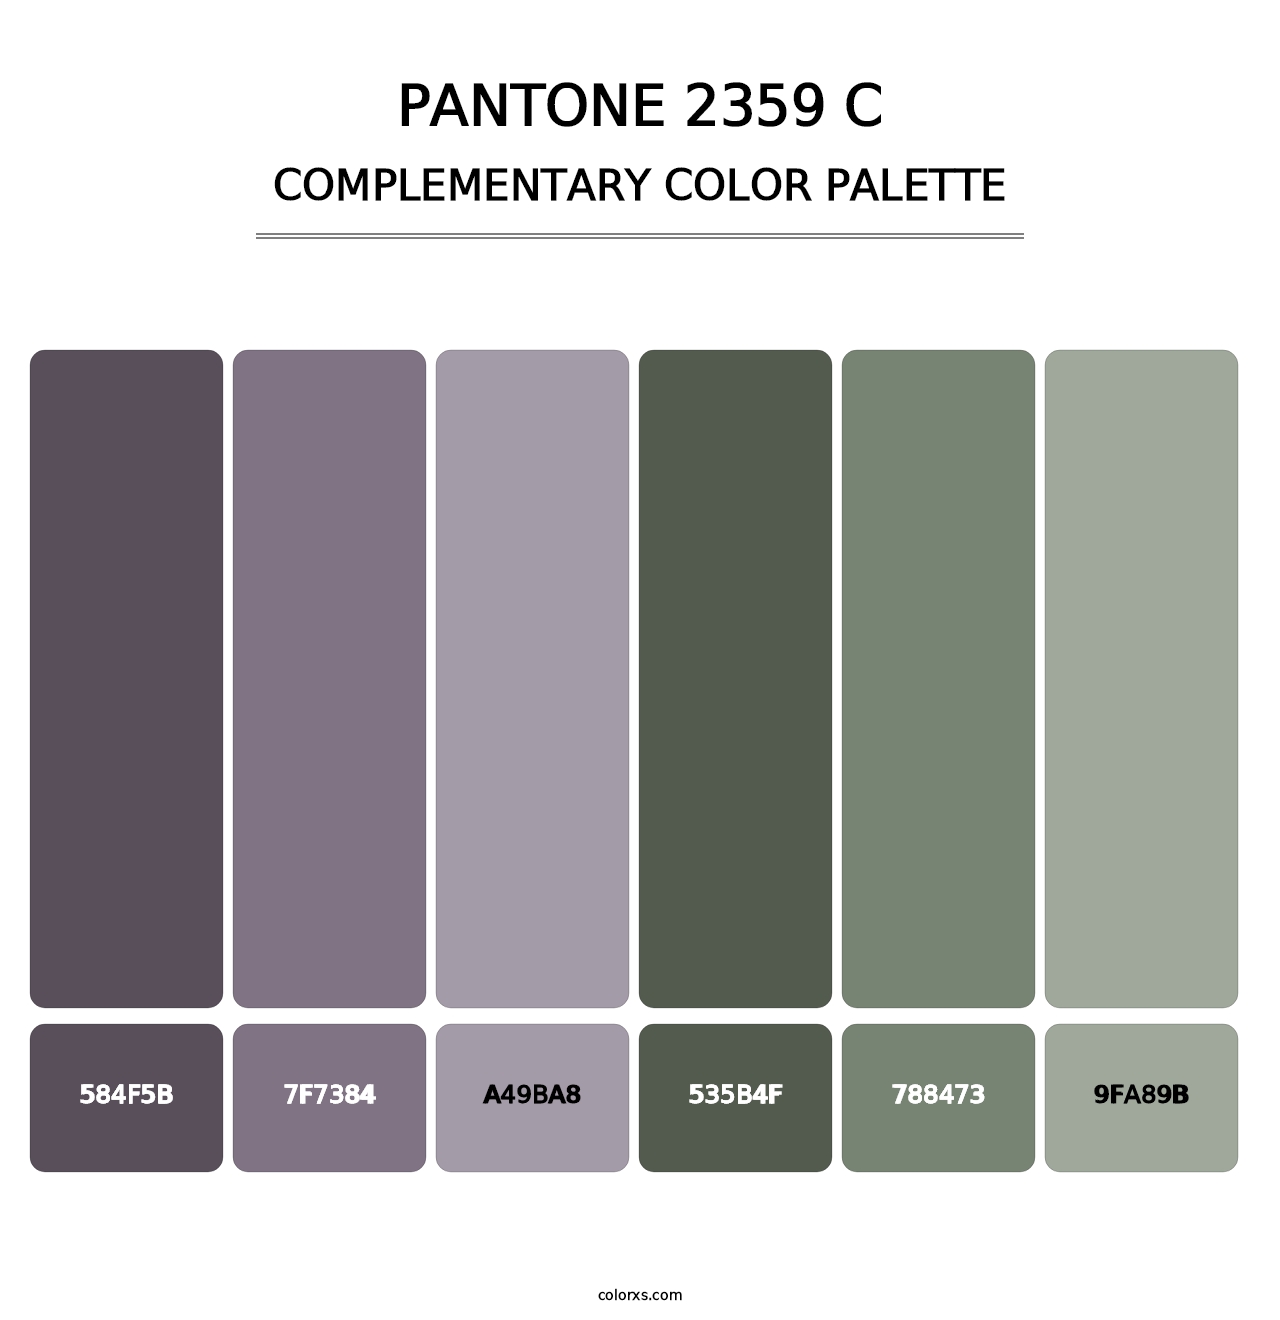 PANTONE 2359 C - Complementary Color Palette